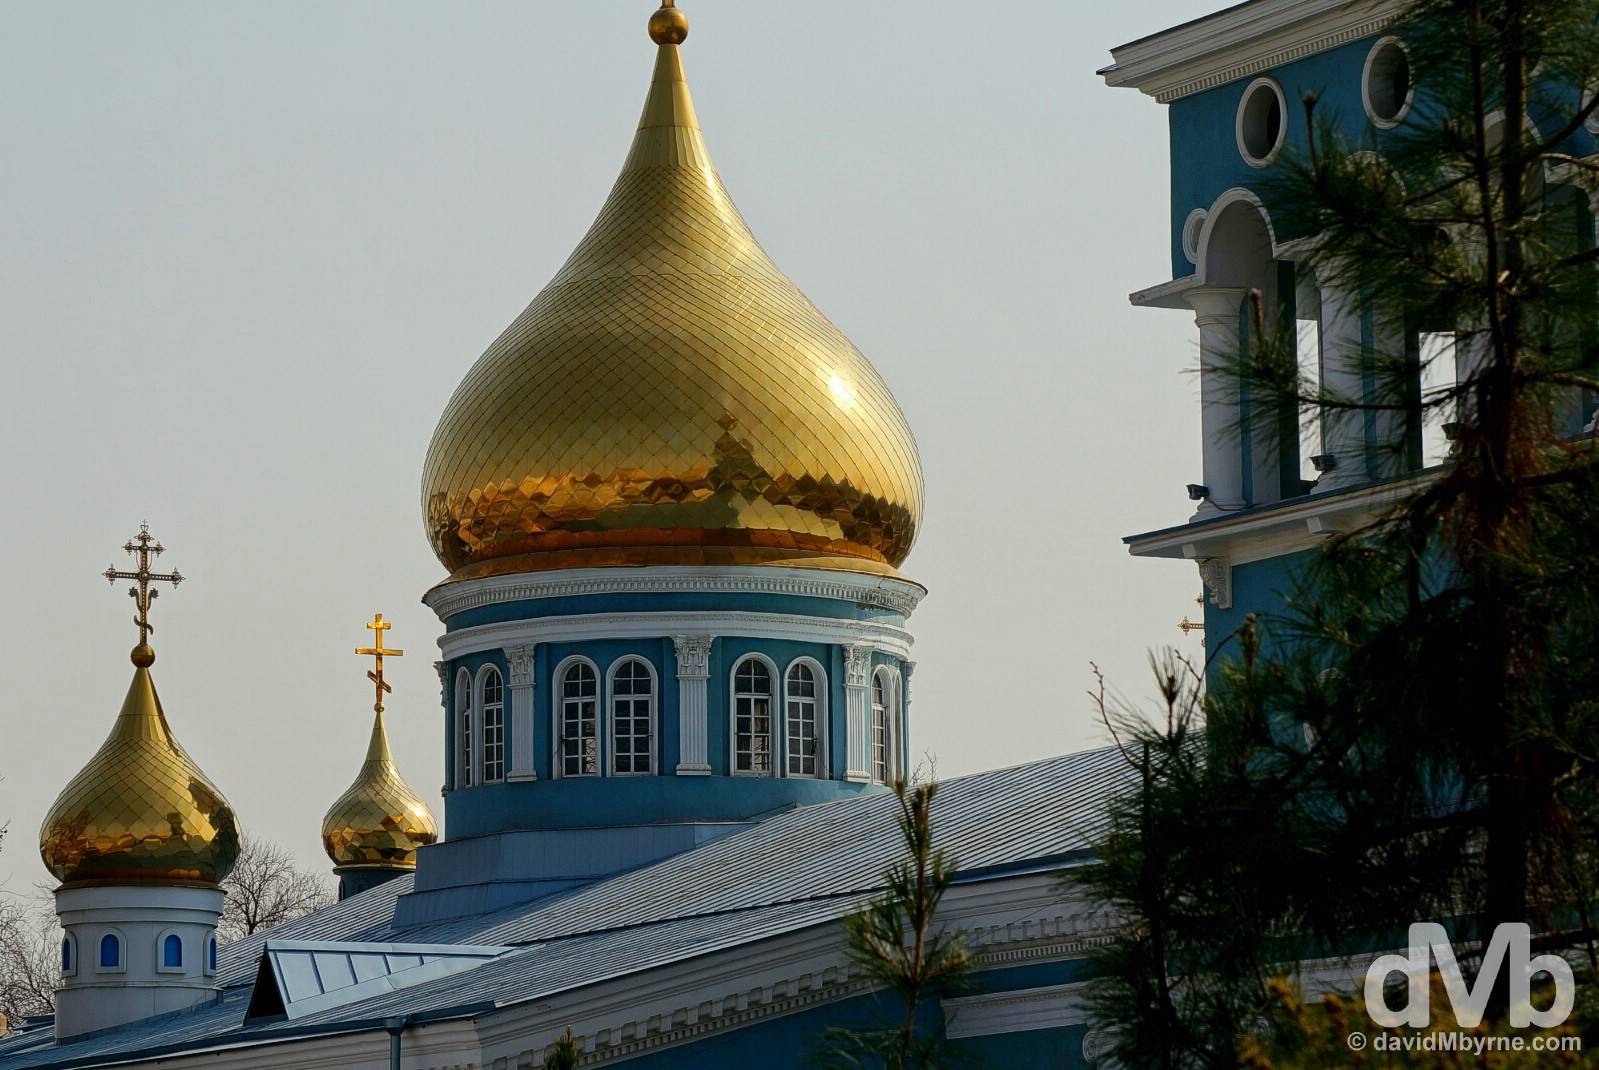 Assumption Cathedral in Tashkent, Uzbekistan. March 5, 2015.